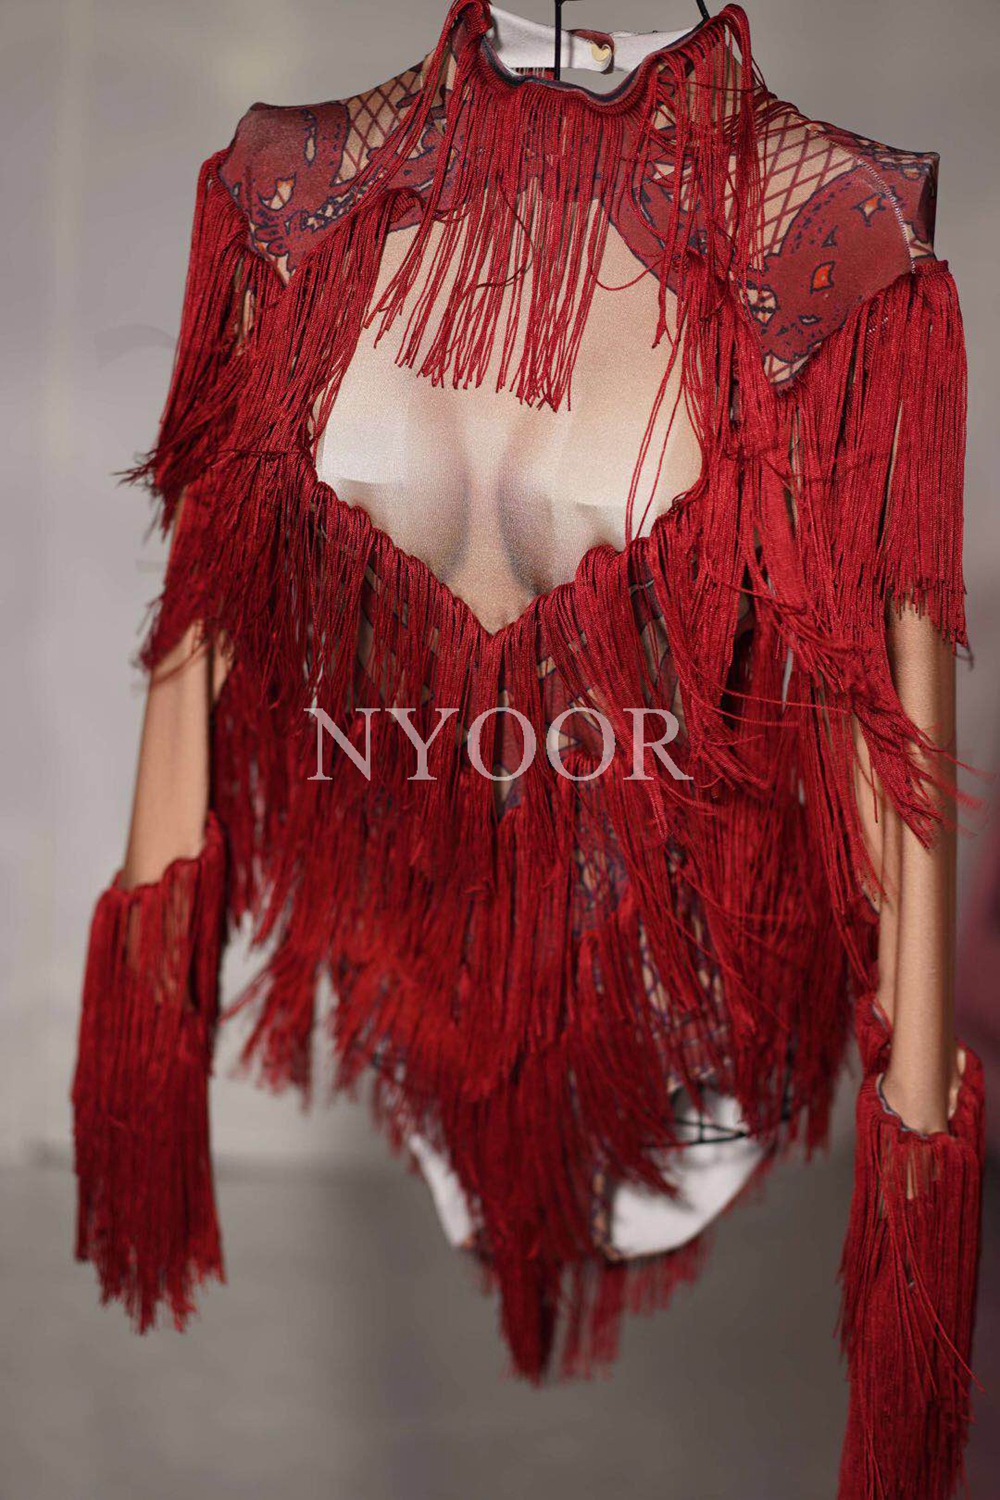 New Red Long Sleeve Tassels Bodysuit Sexy Bar Club Dance Costume Nightclub Singer Performance Show Fringe Leotard Stage Wear